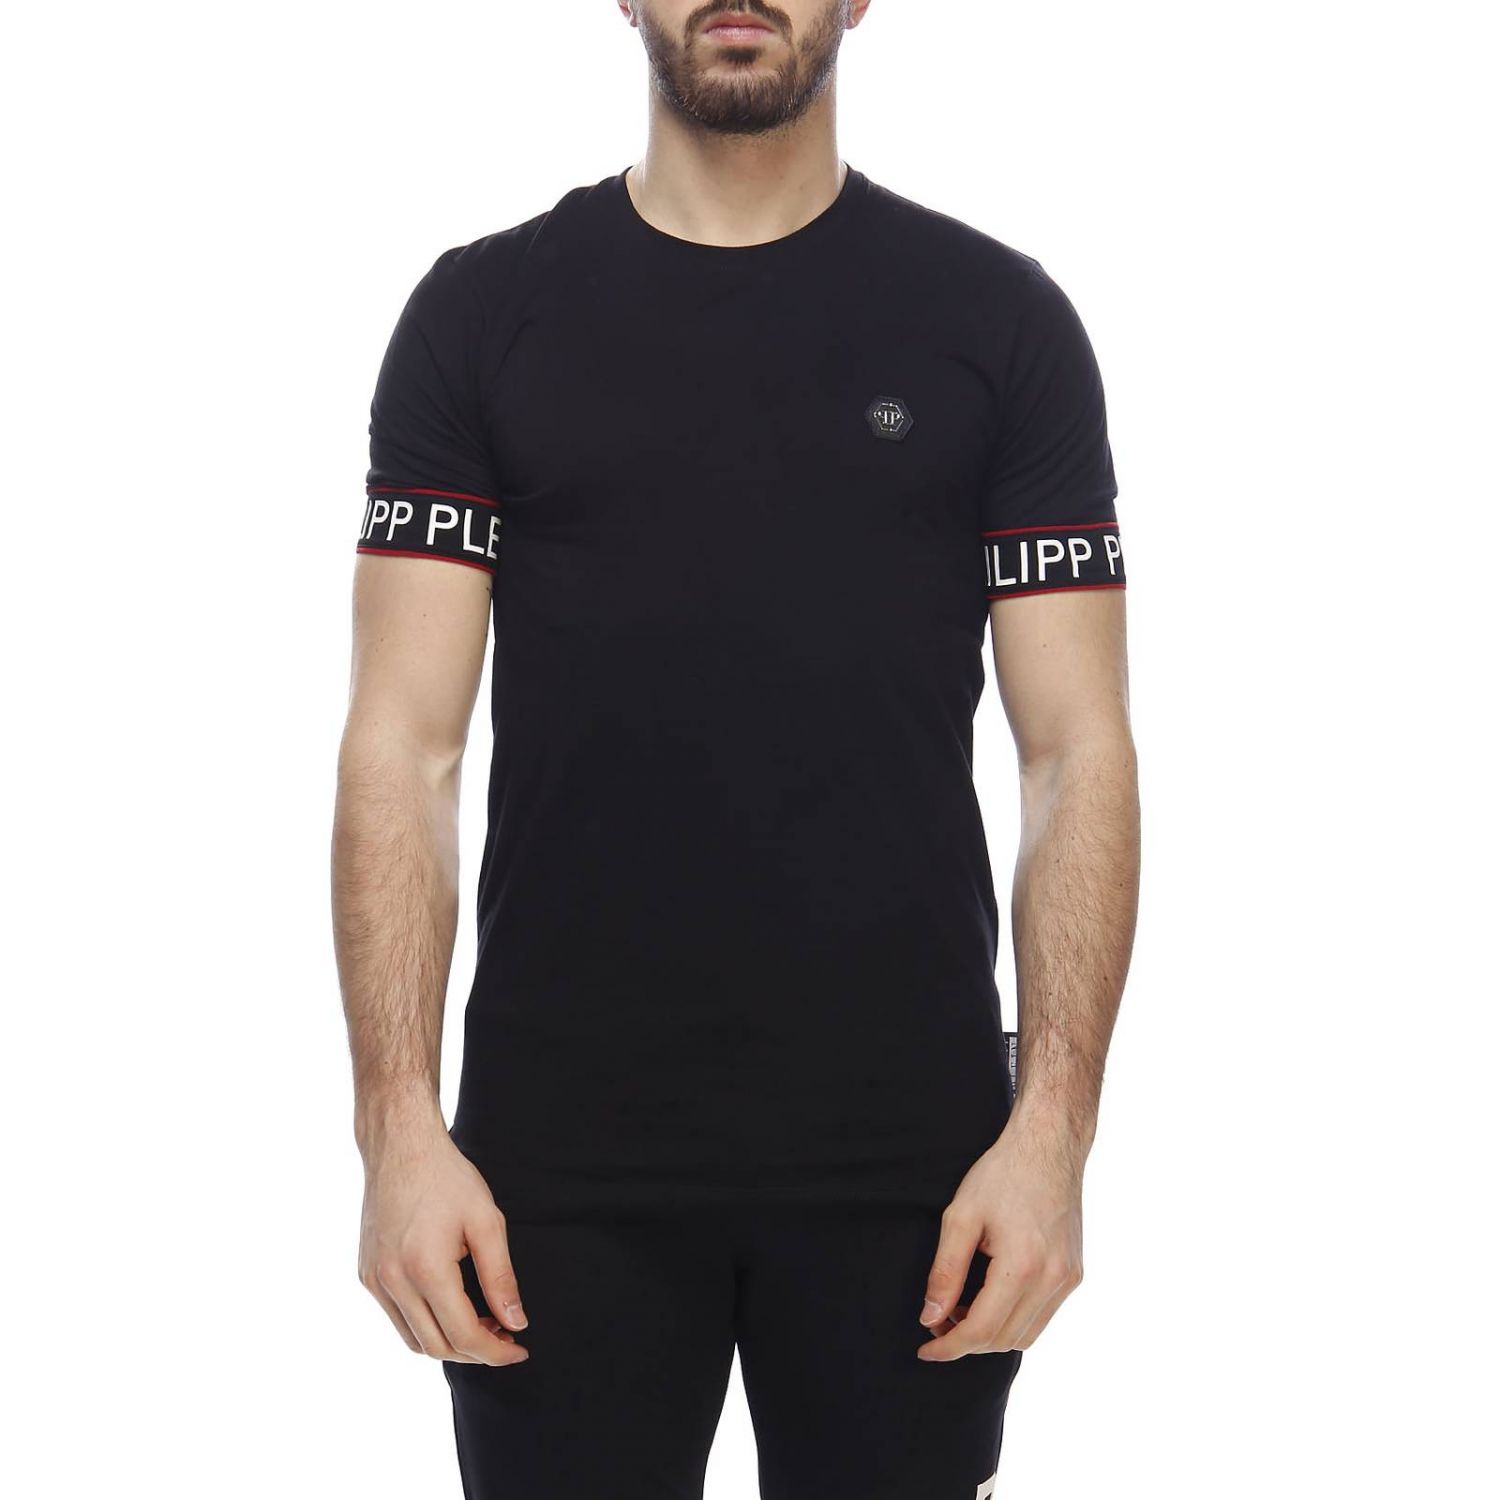 Philipp Plein Outlet: t-shirt for man - Black | Philipp Plein t-shirt ...